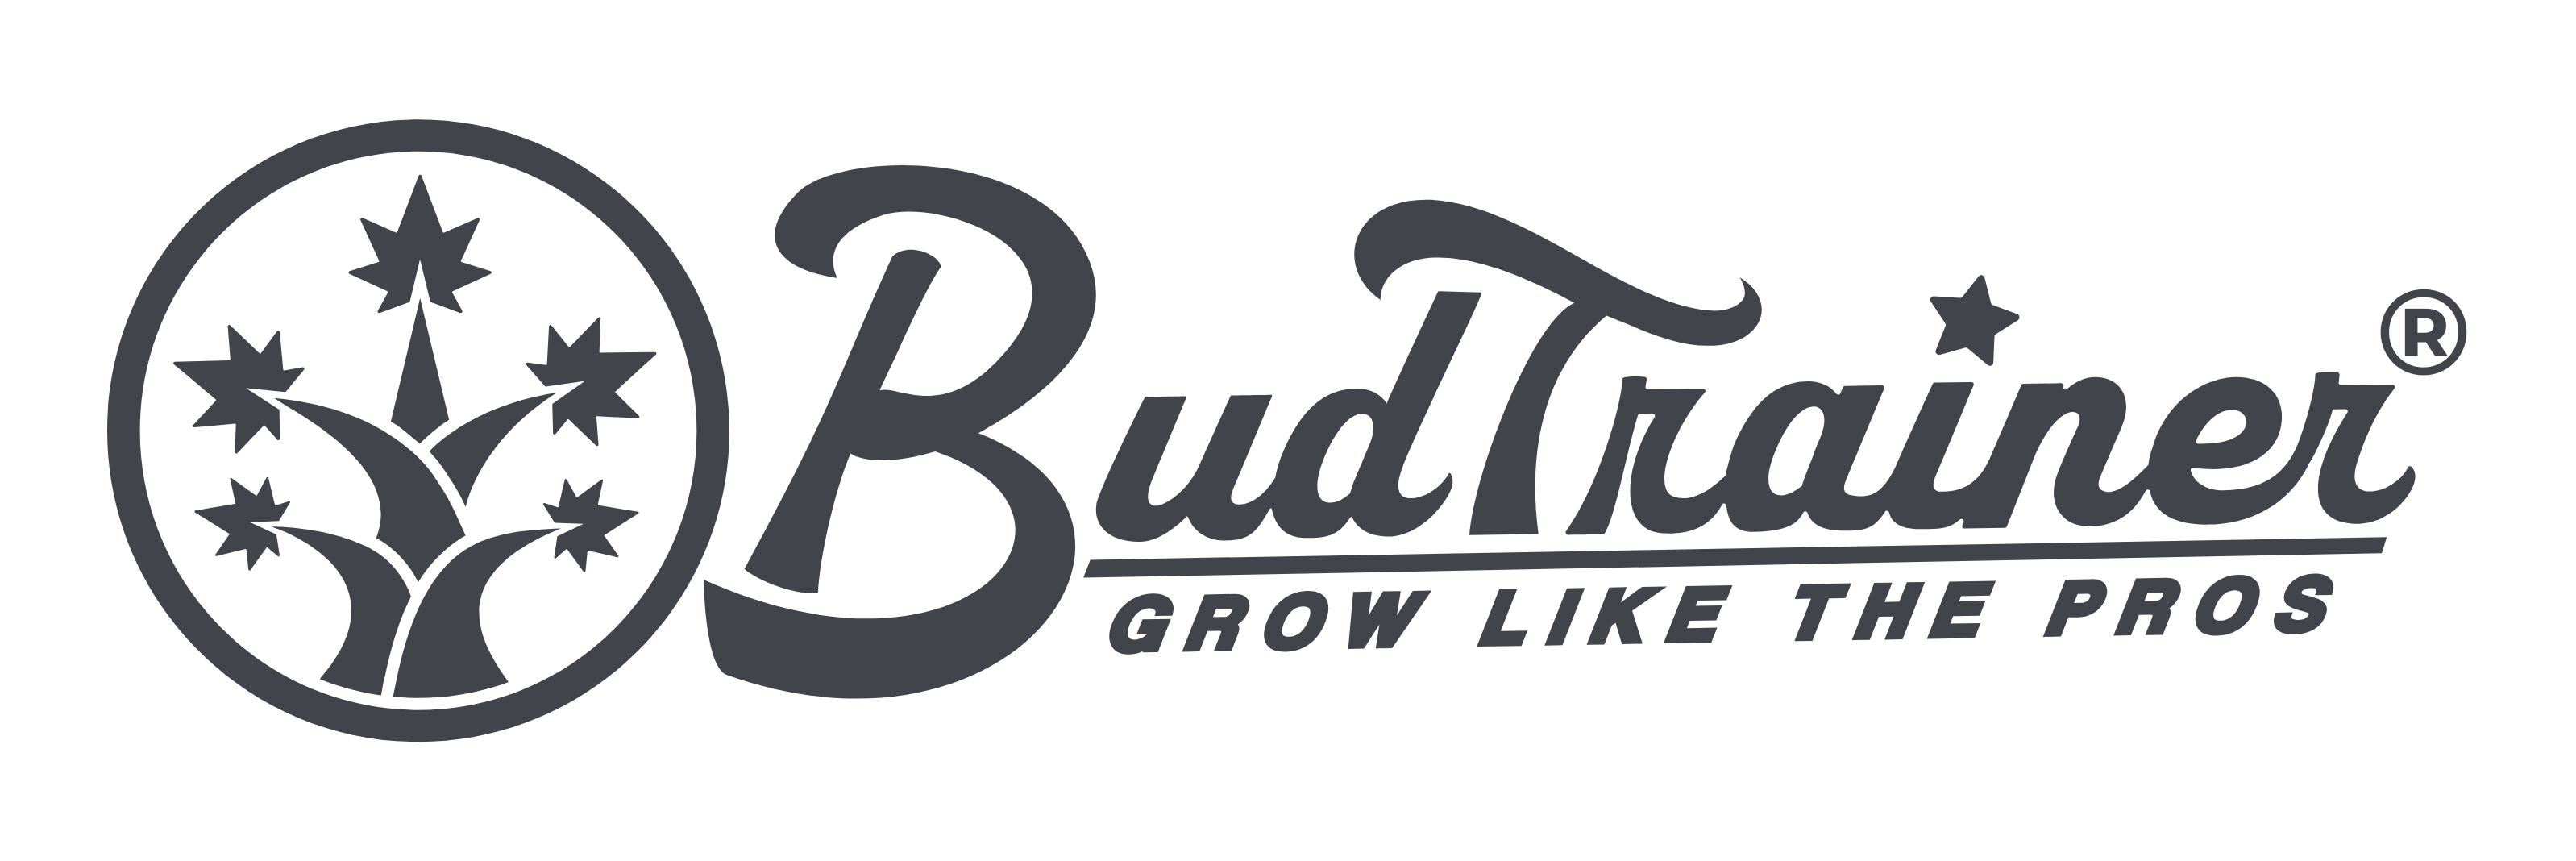 BudClips® 20pk - Grow Big Buds - Universal Size LST Clips